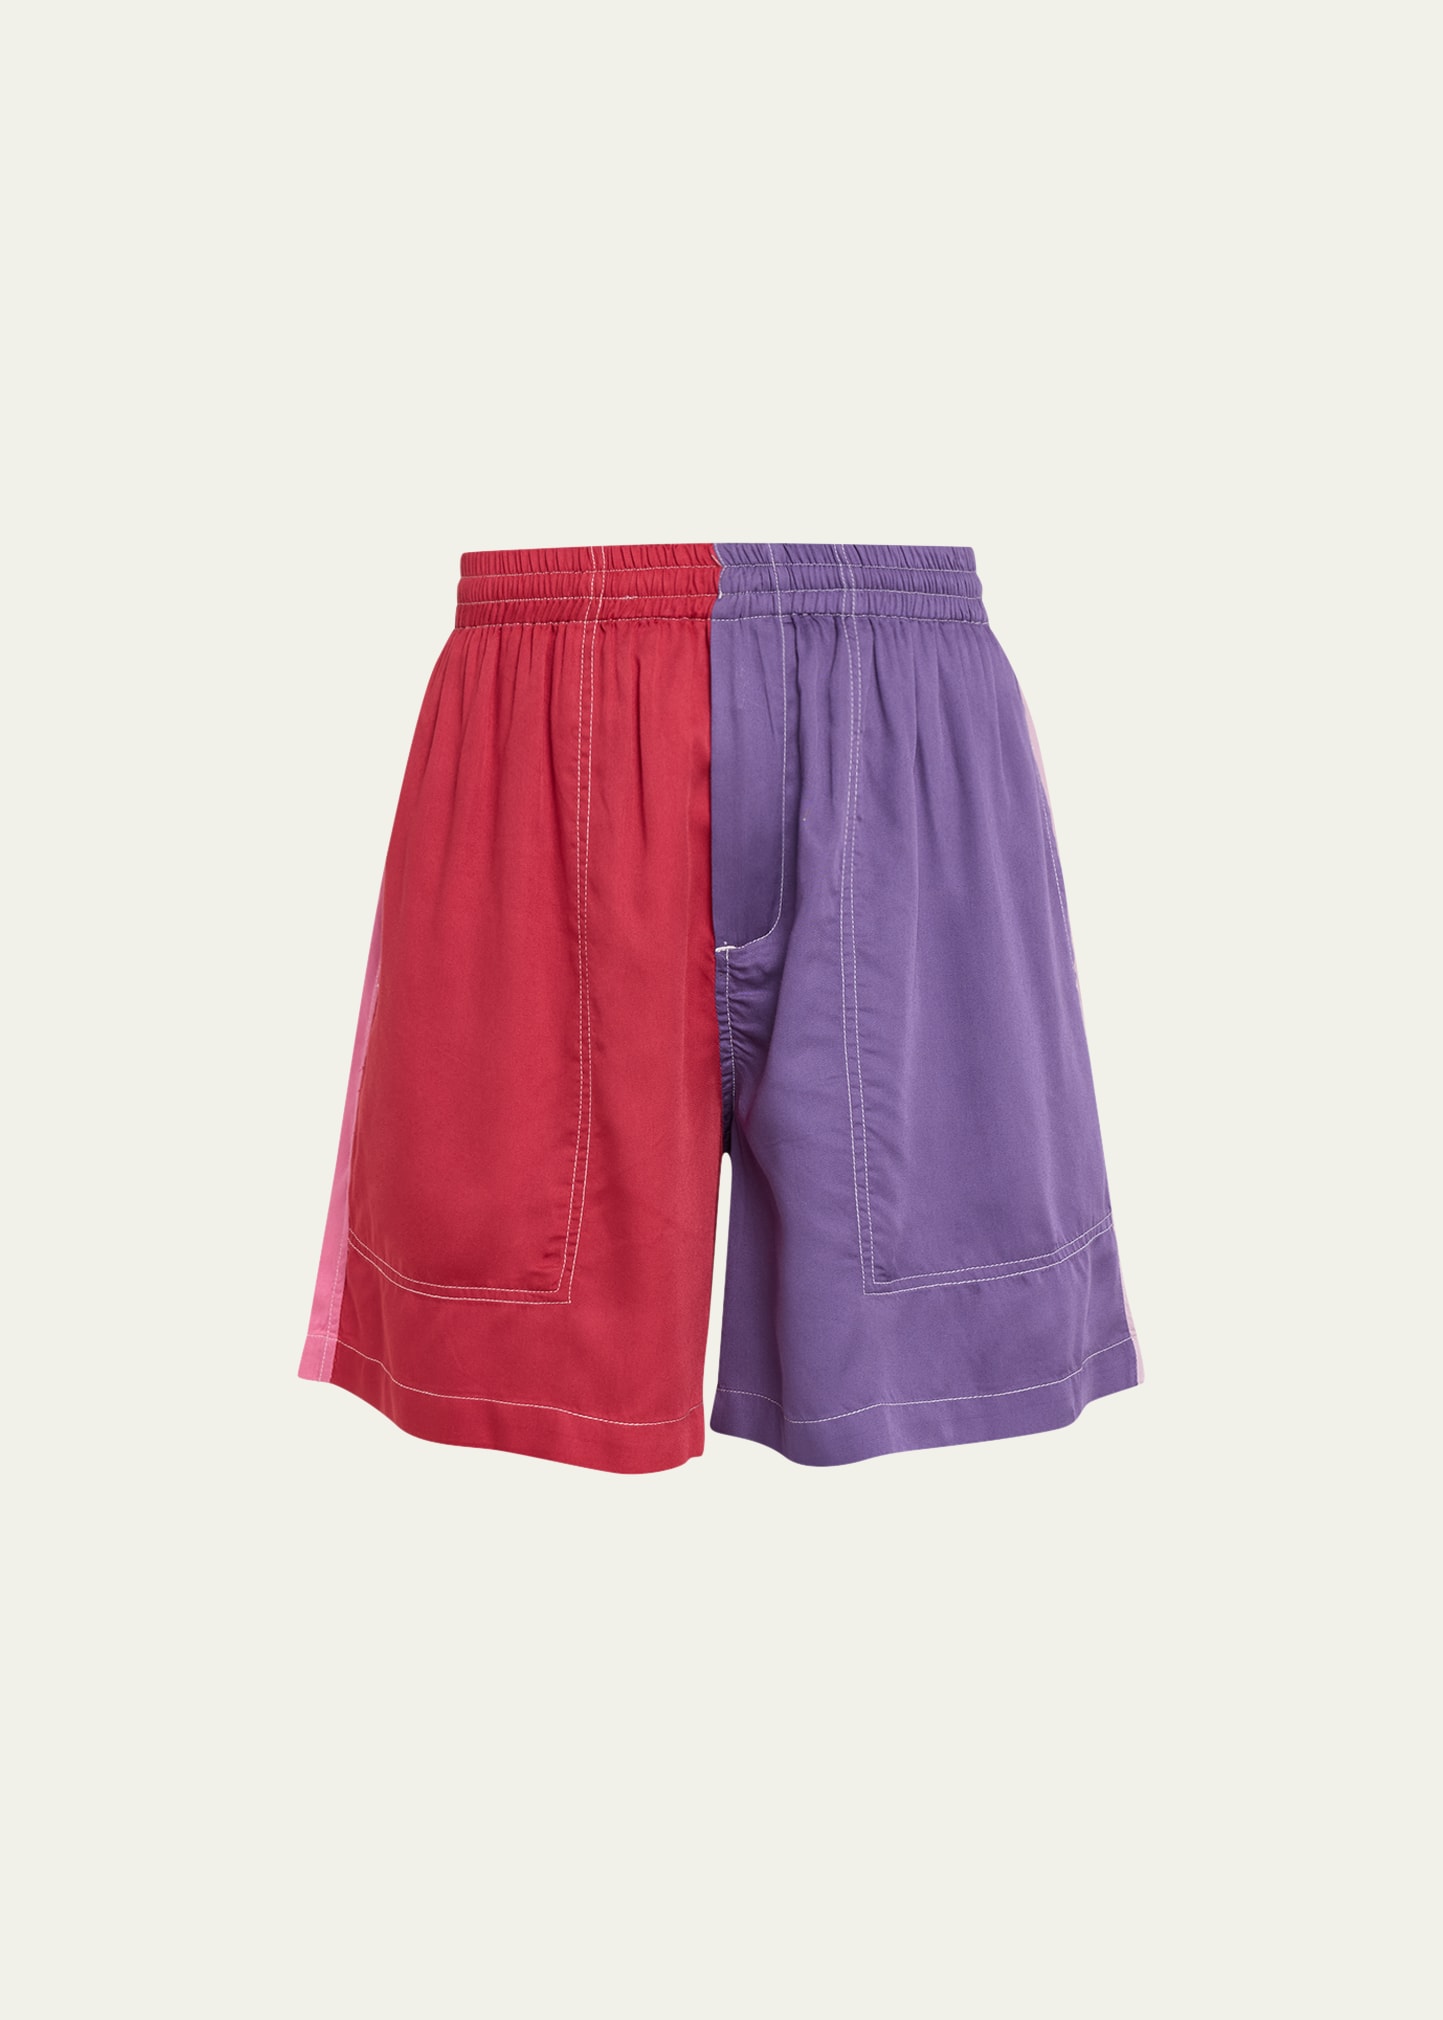 Buckaround Colorblock Shorts